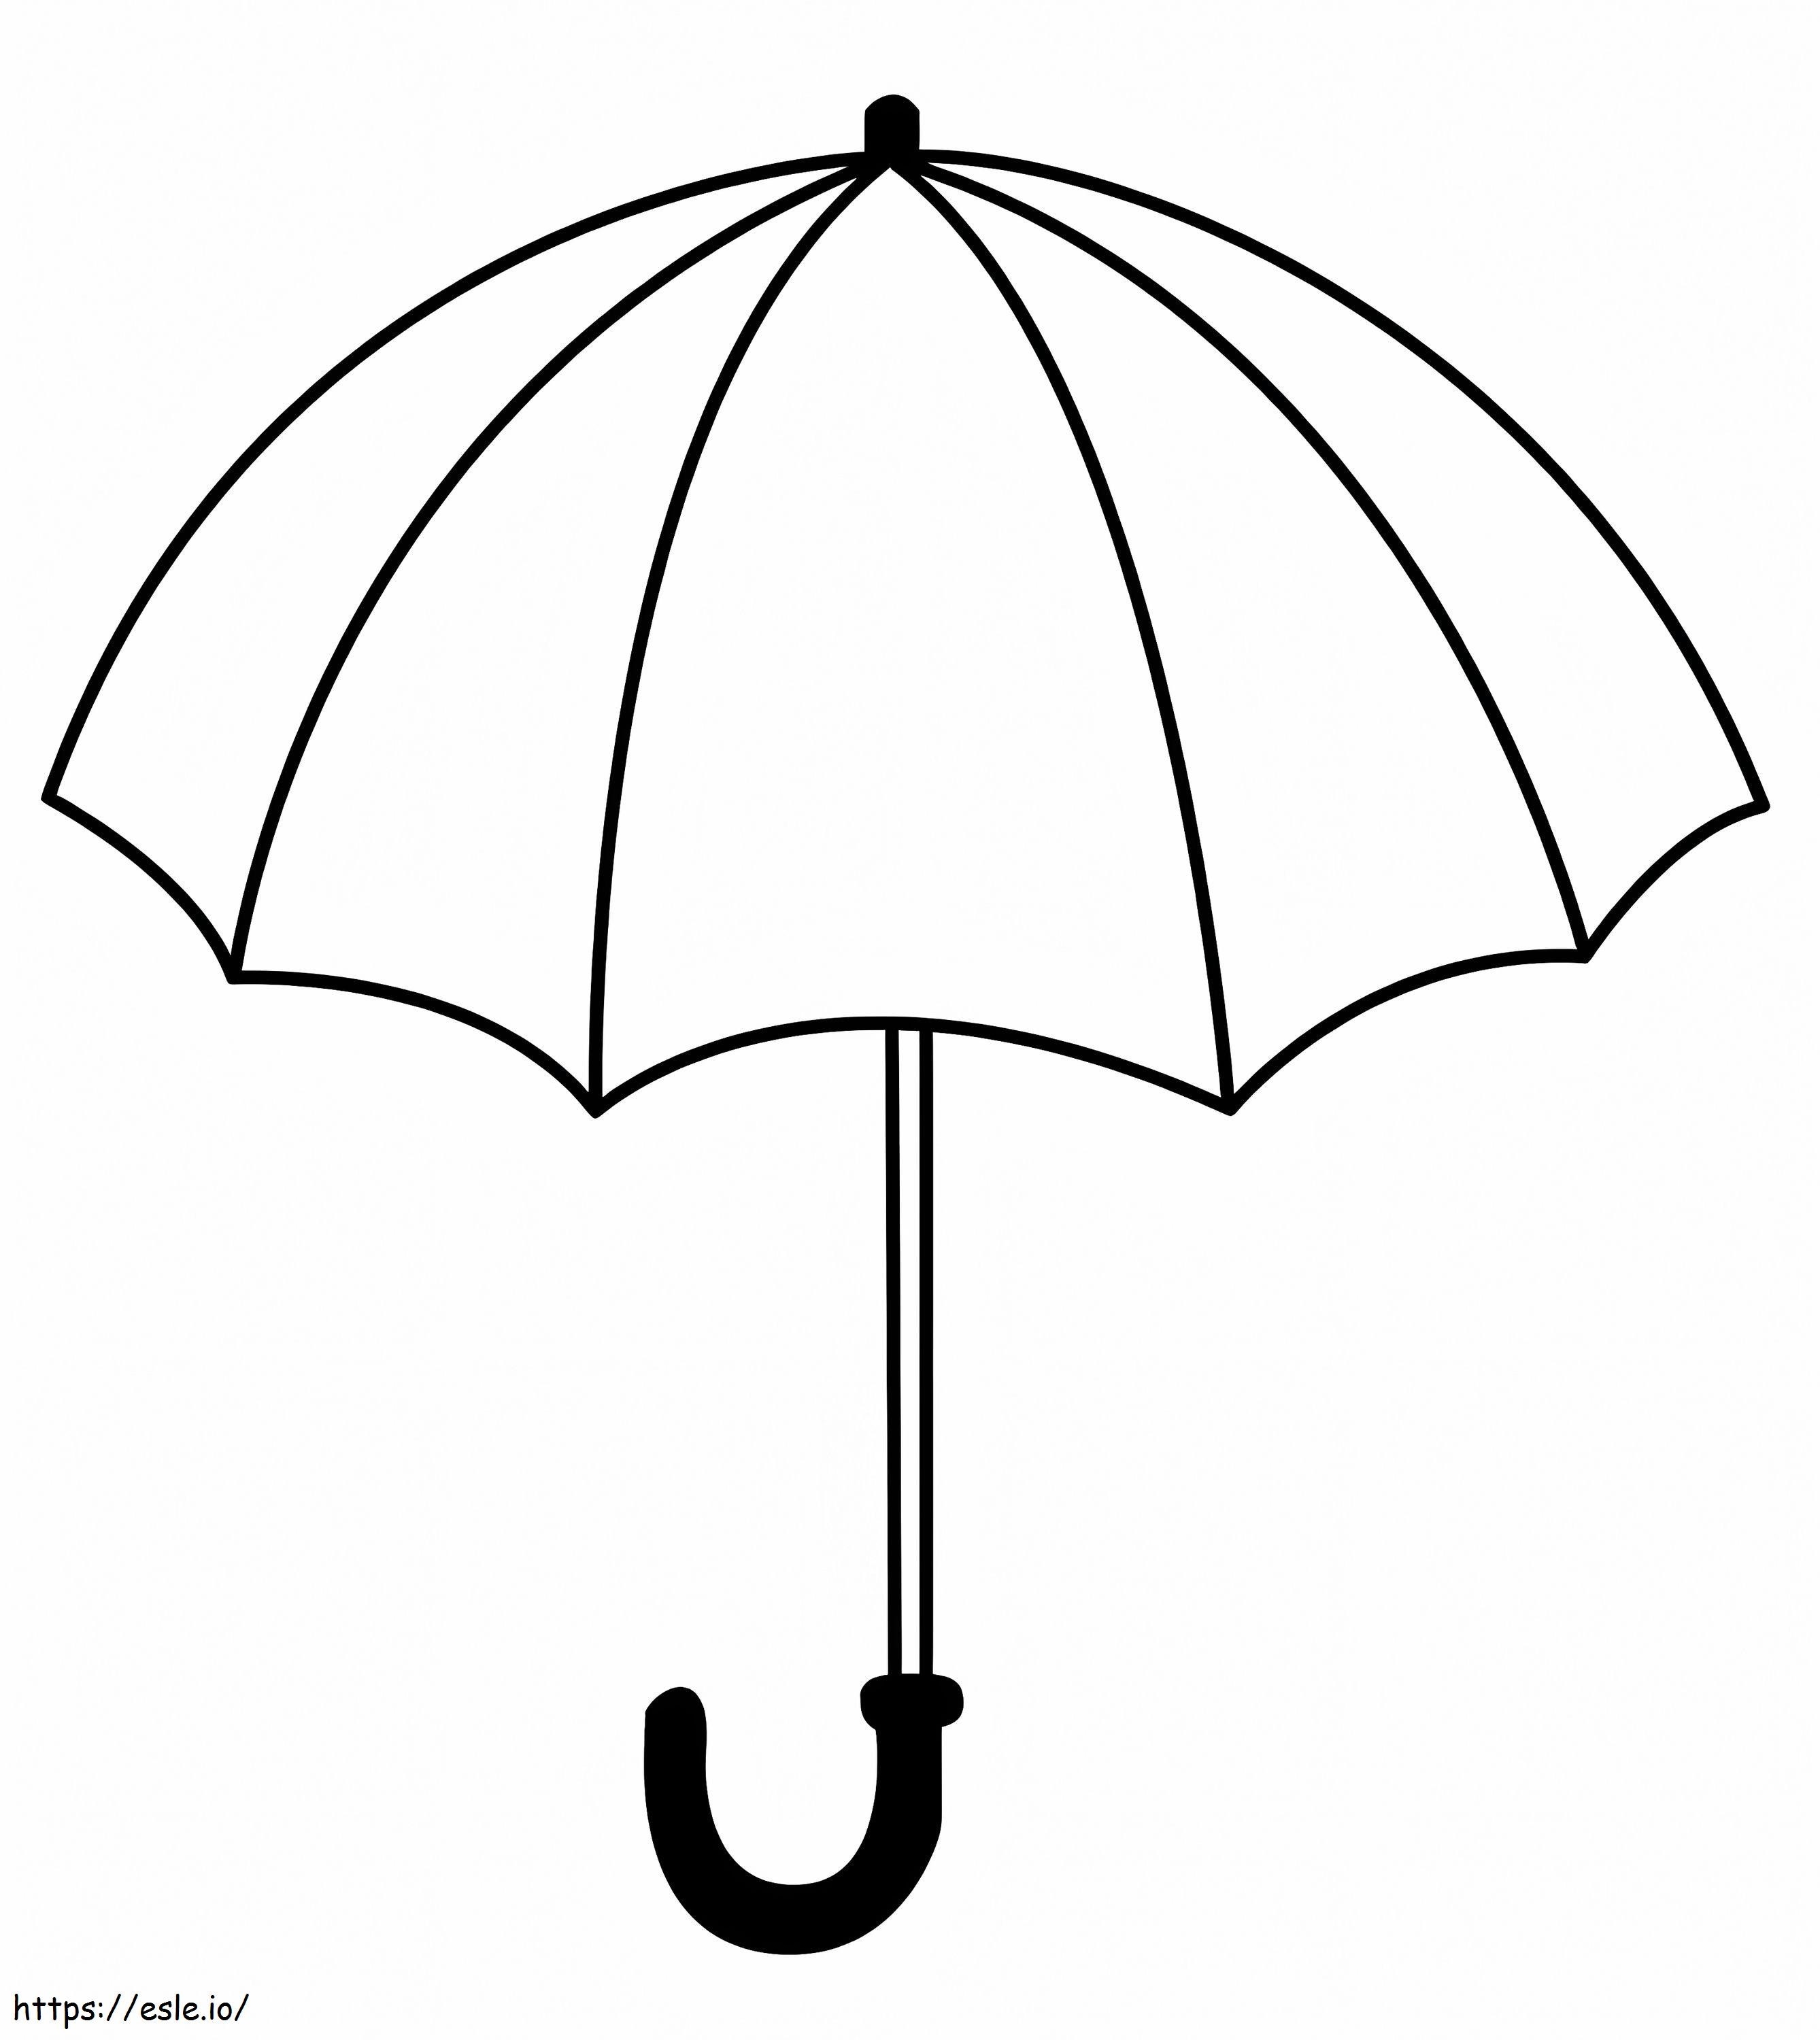 An Umbrella coloring page